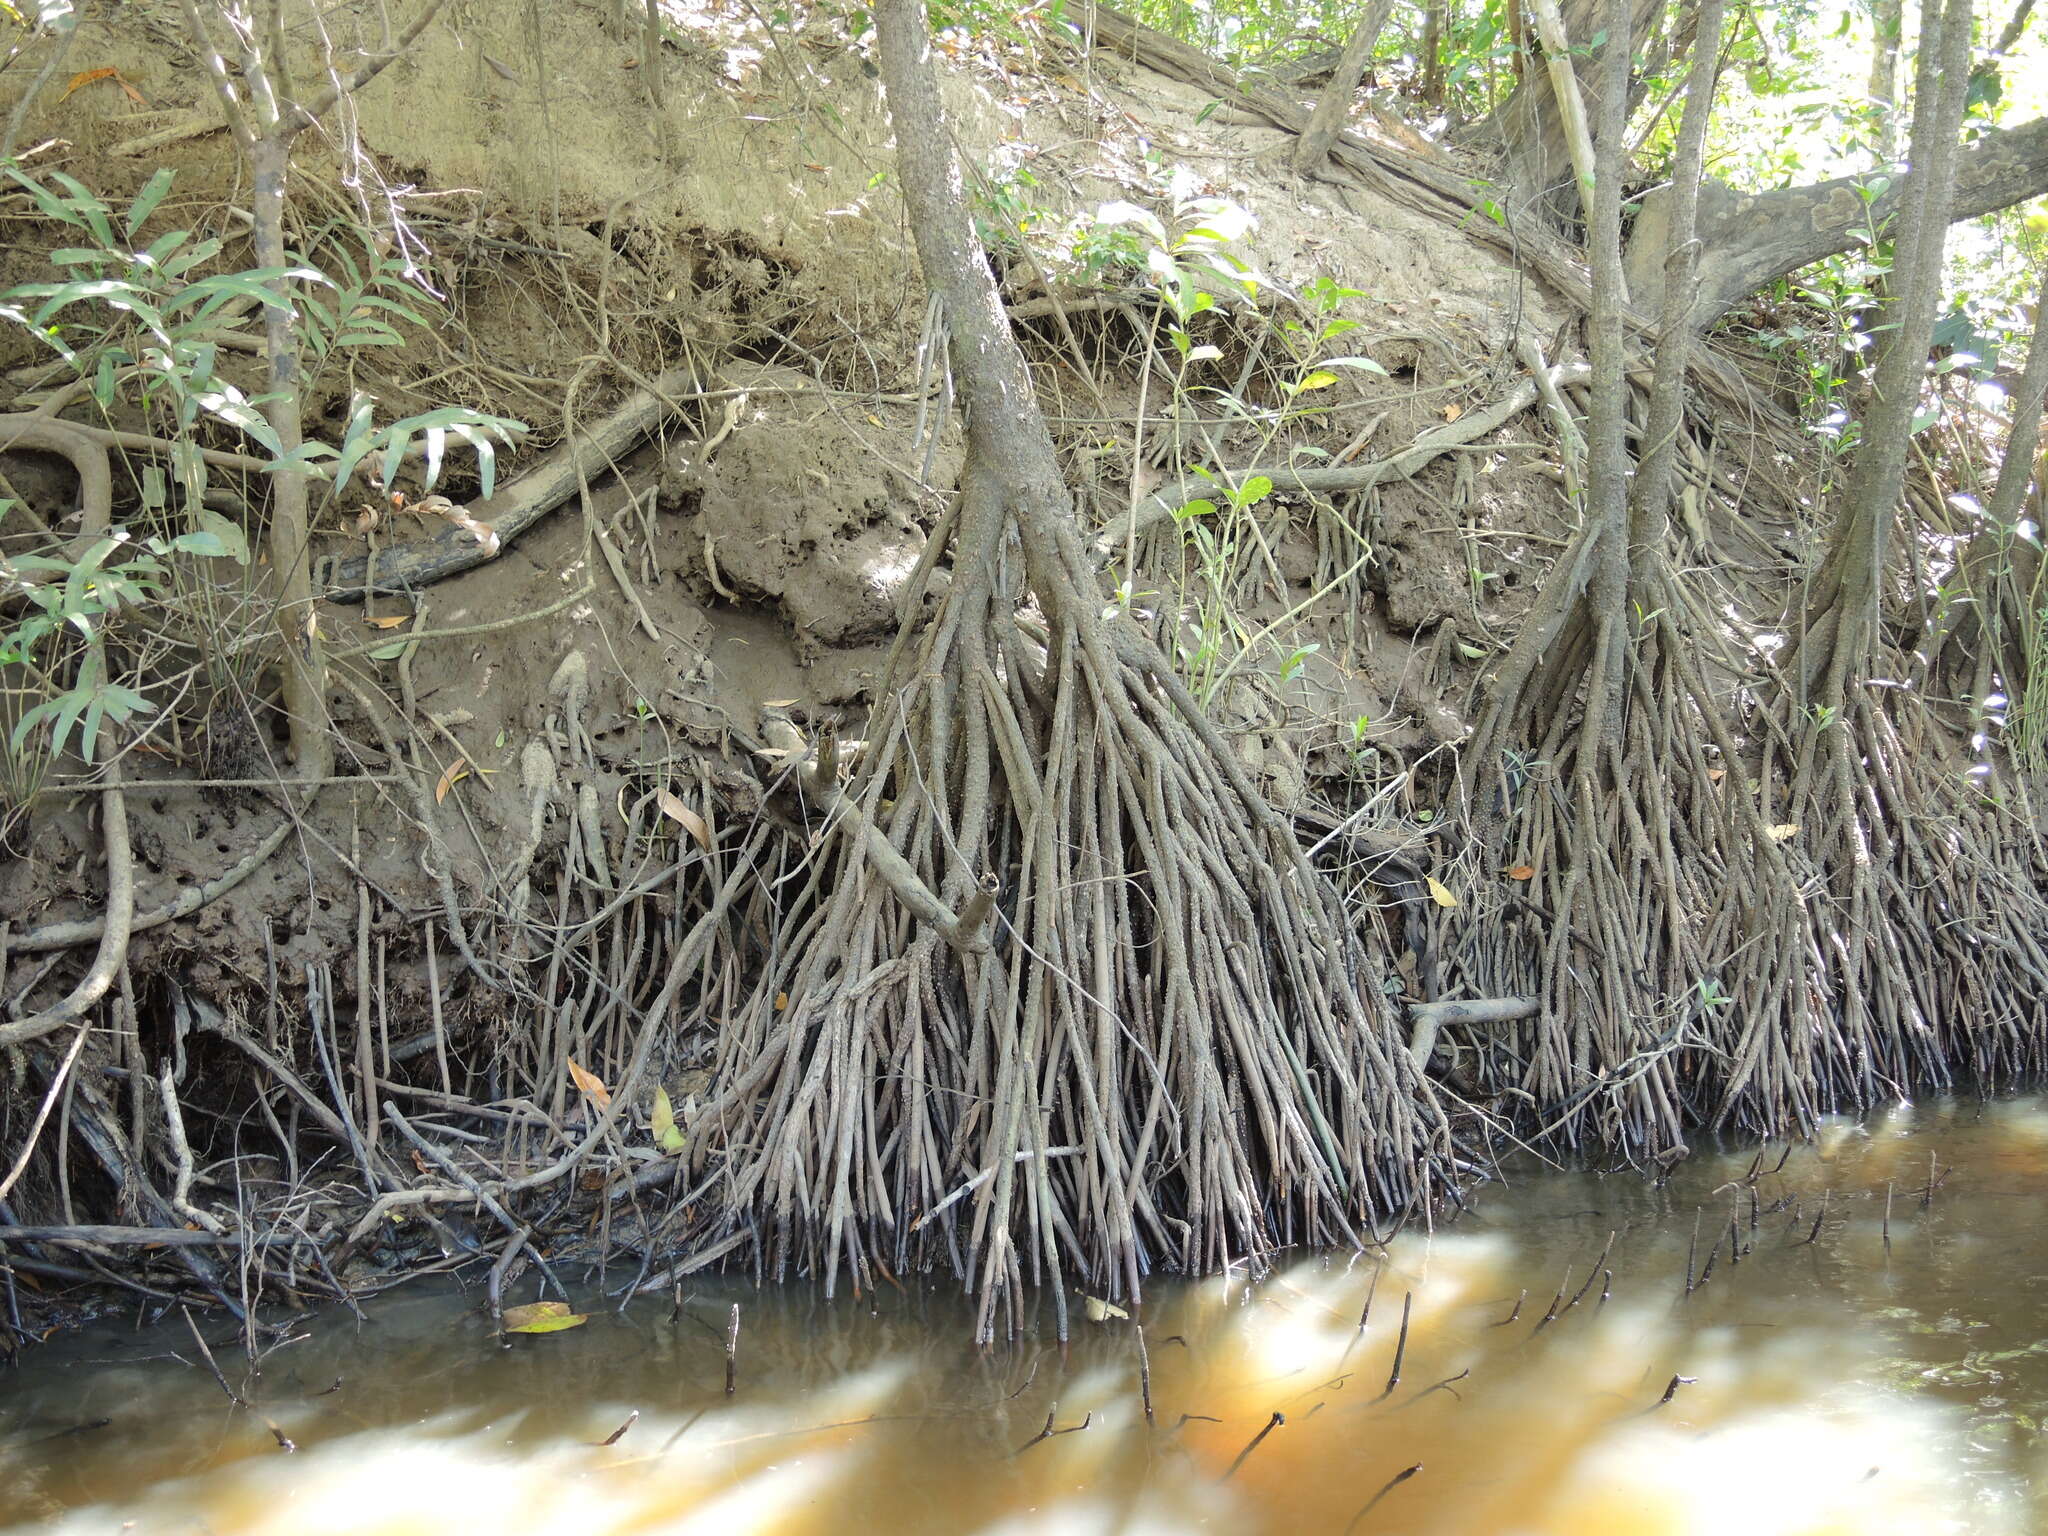 Image of Oriental mangrove